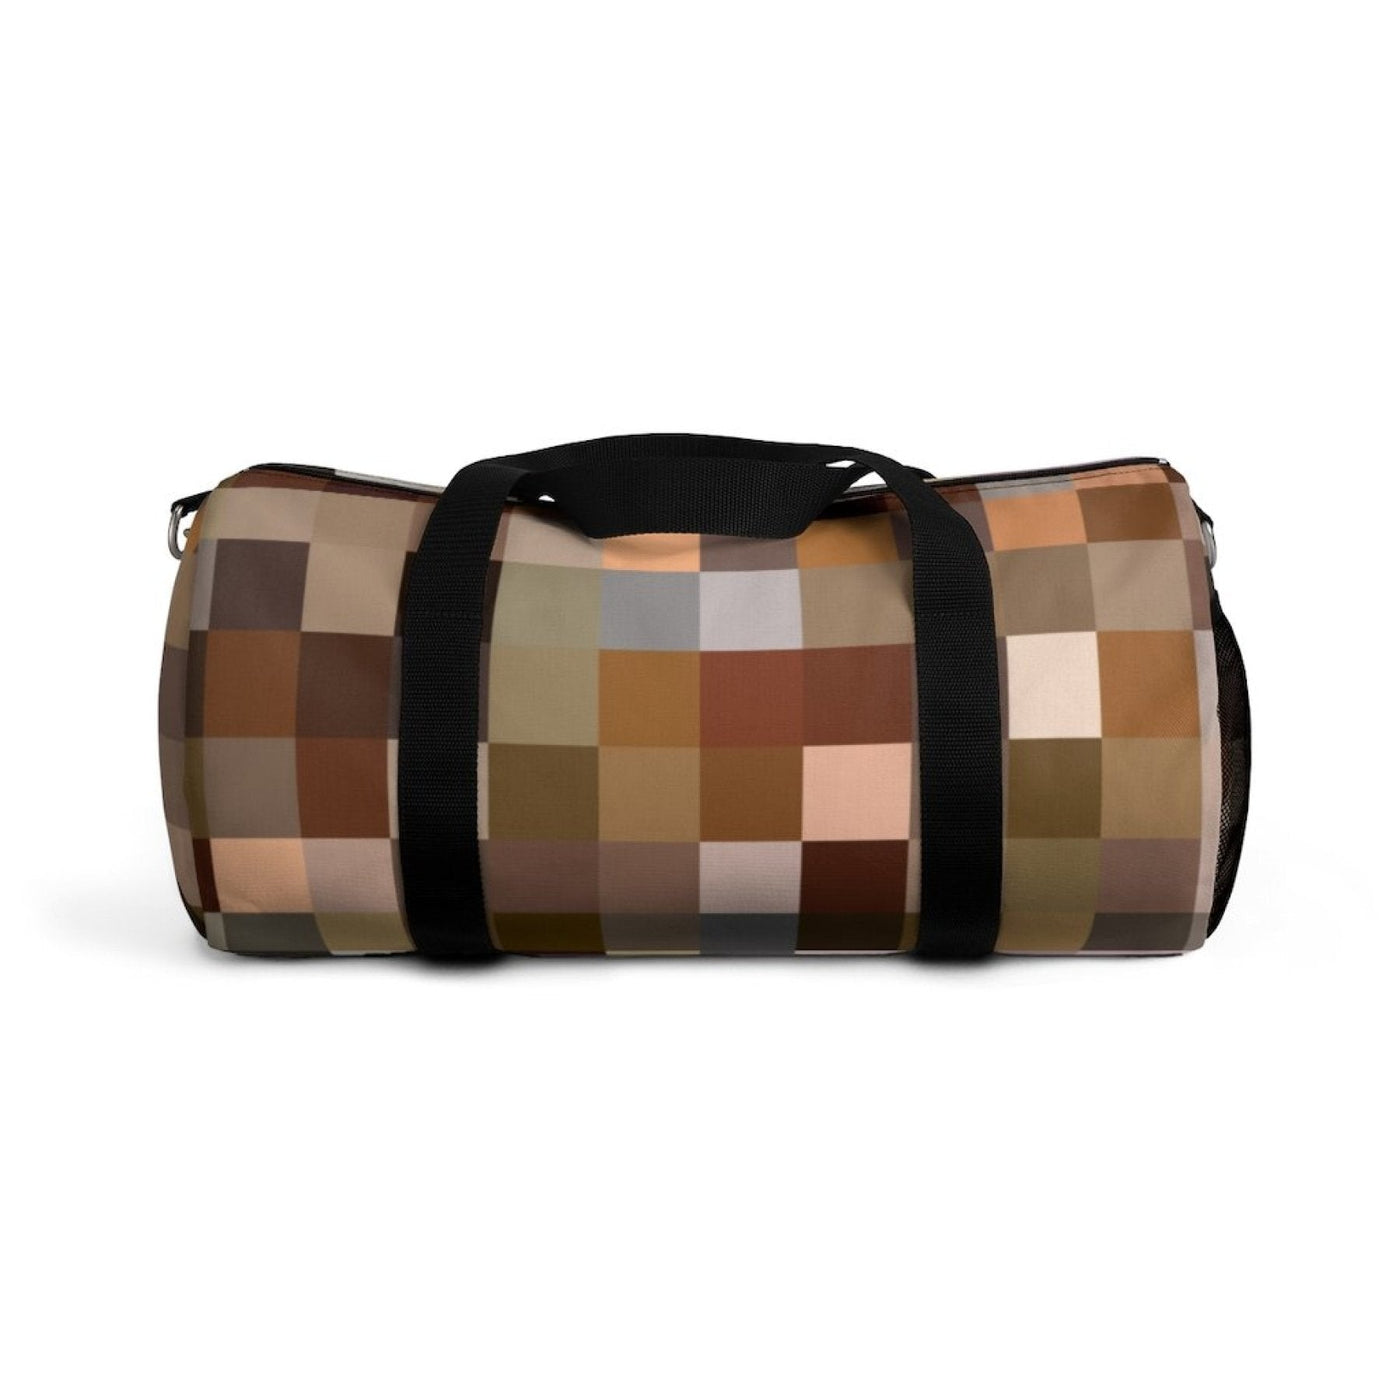 Duffel Bag Carry On Luggage Brown Multicolor - Bags | Duffel Bags